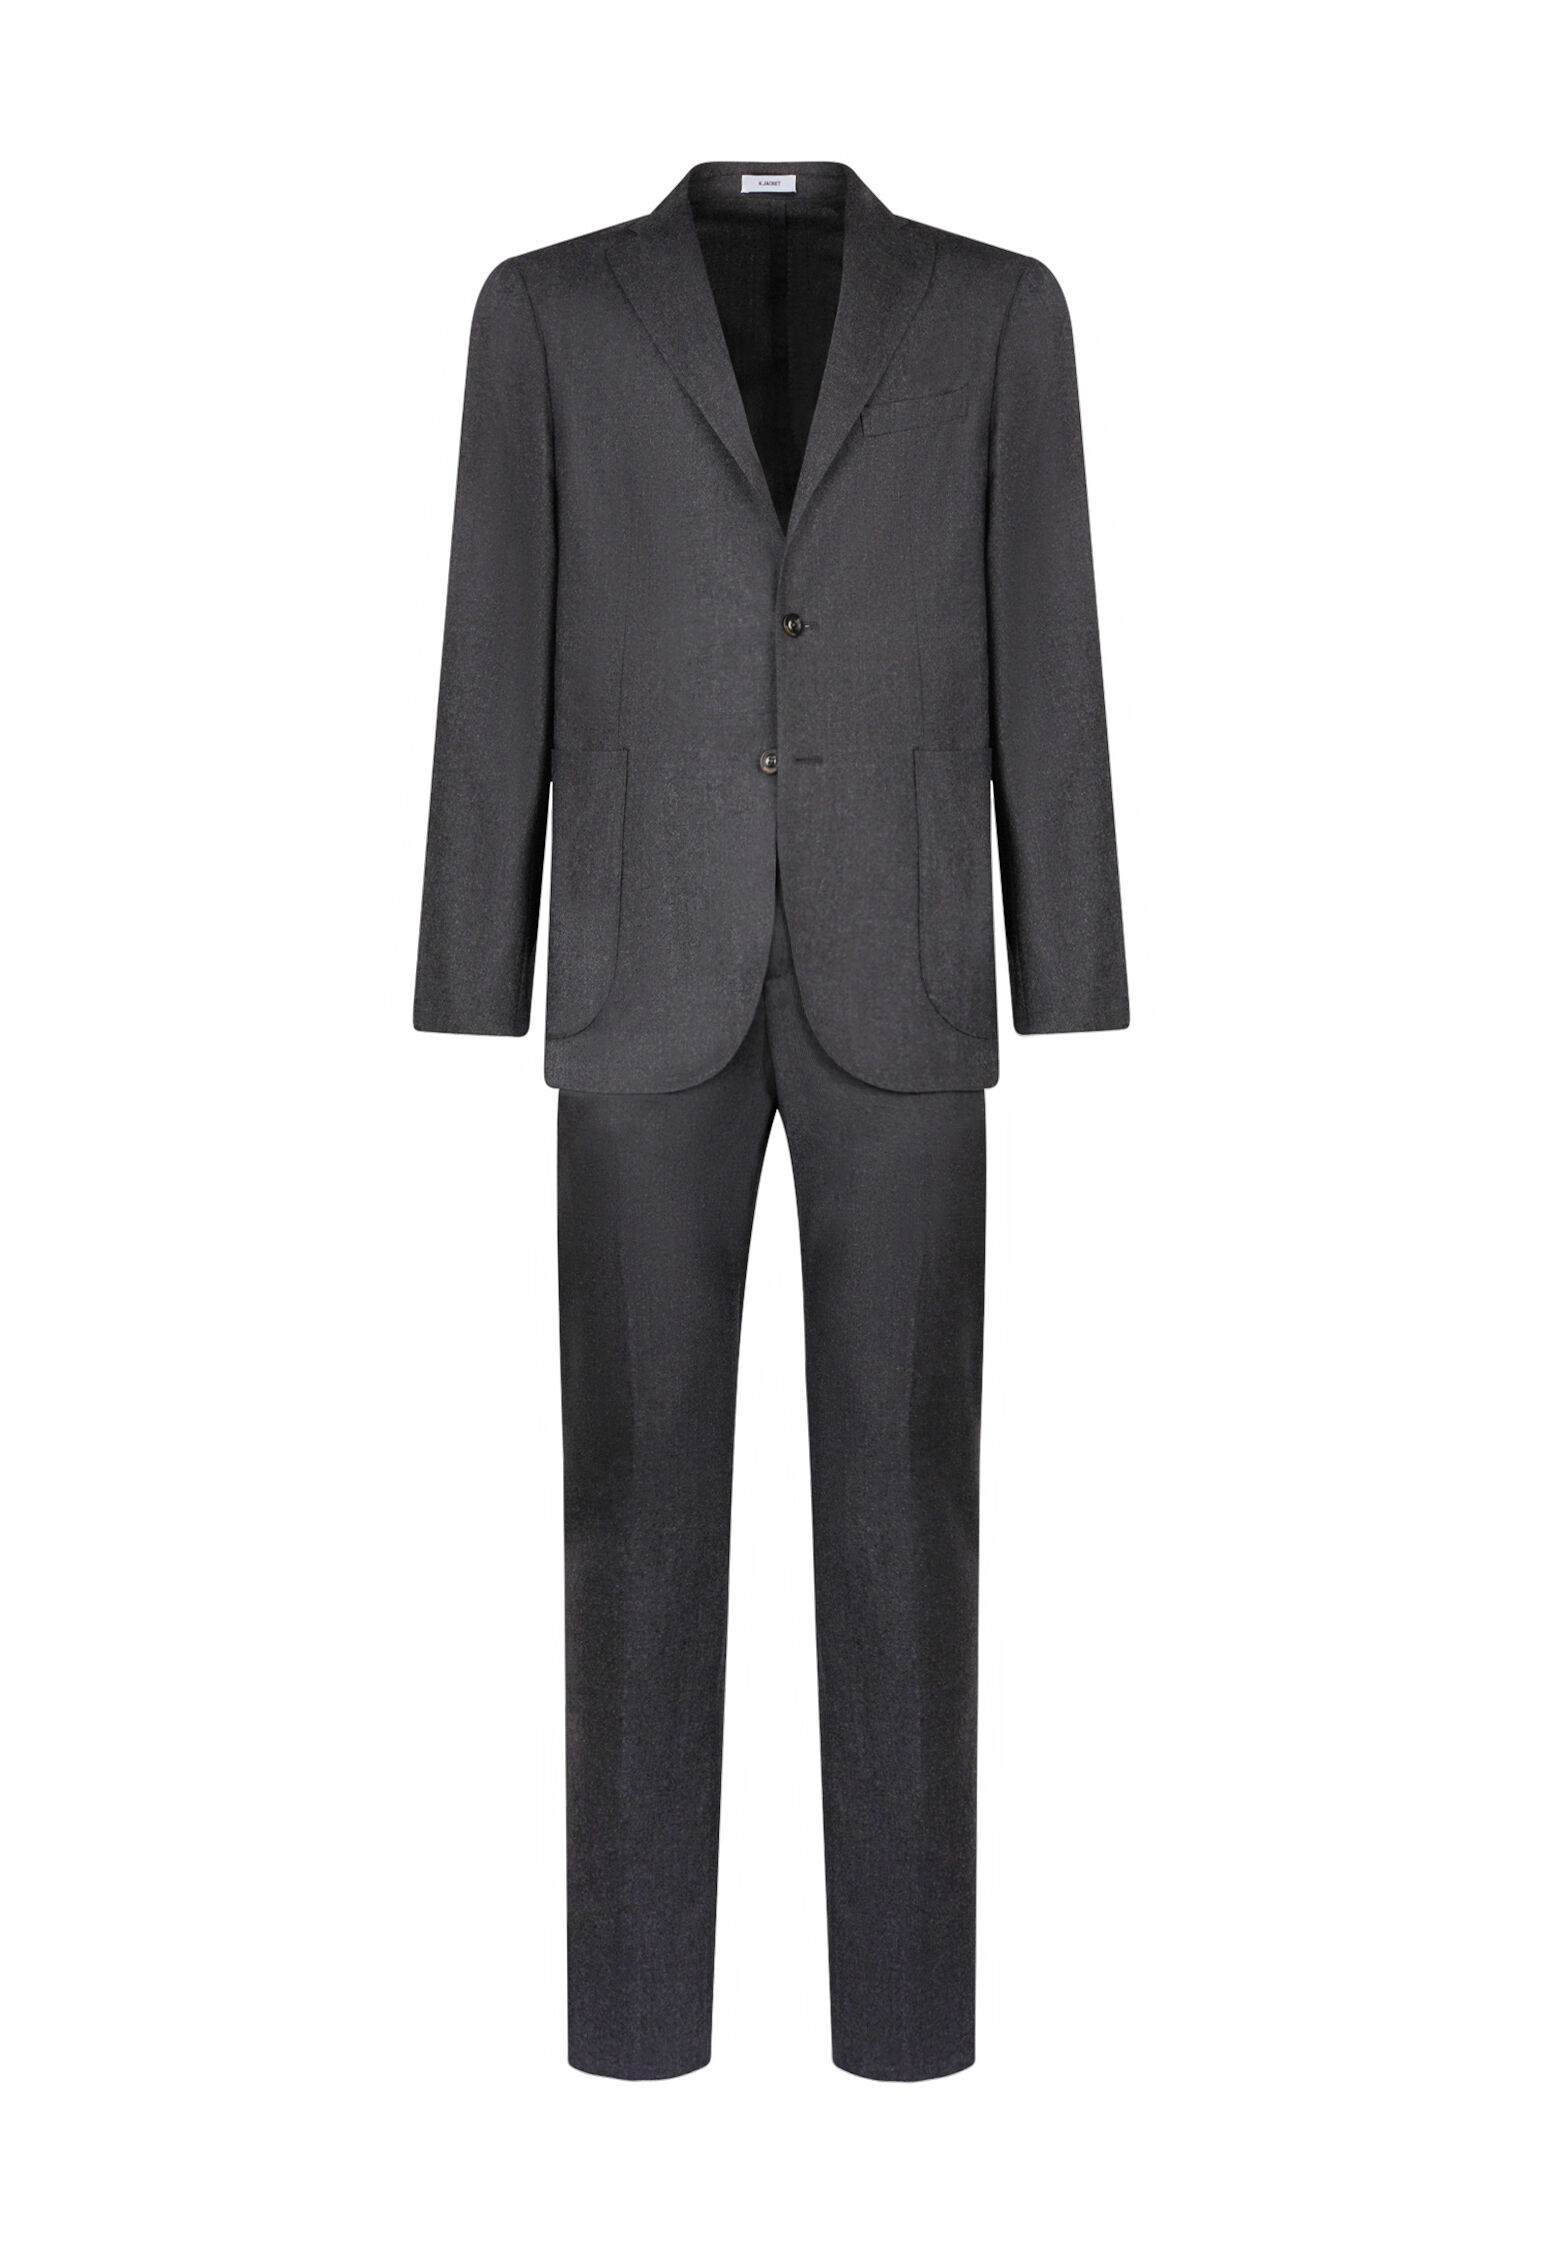 Mens Black Suits Custom Made Bespoke Tailored Italian Wool Bespoke Wedding  Suits | eBay